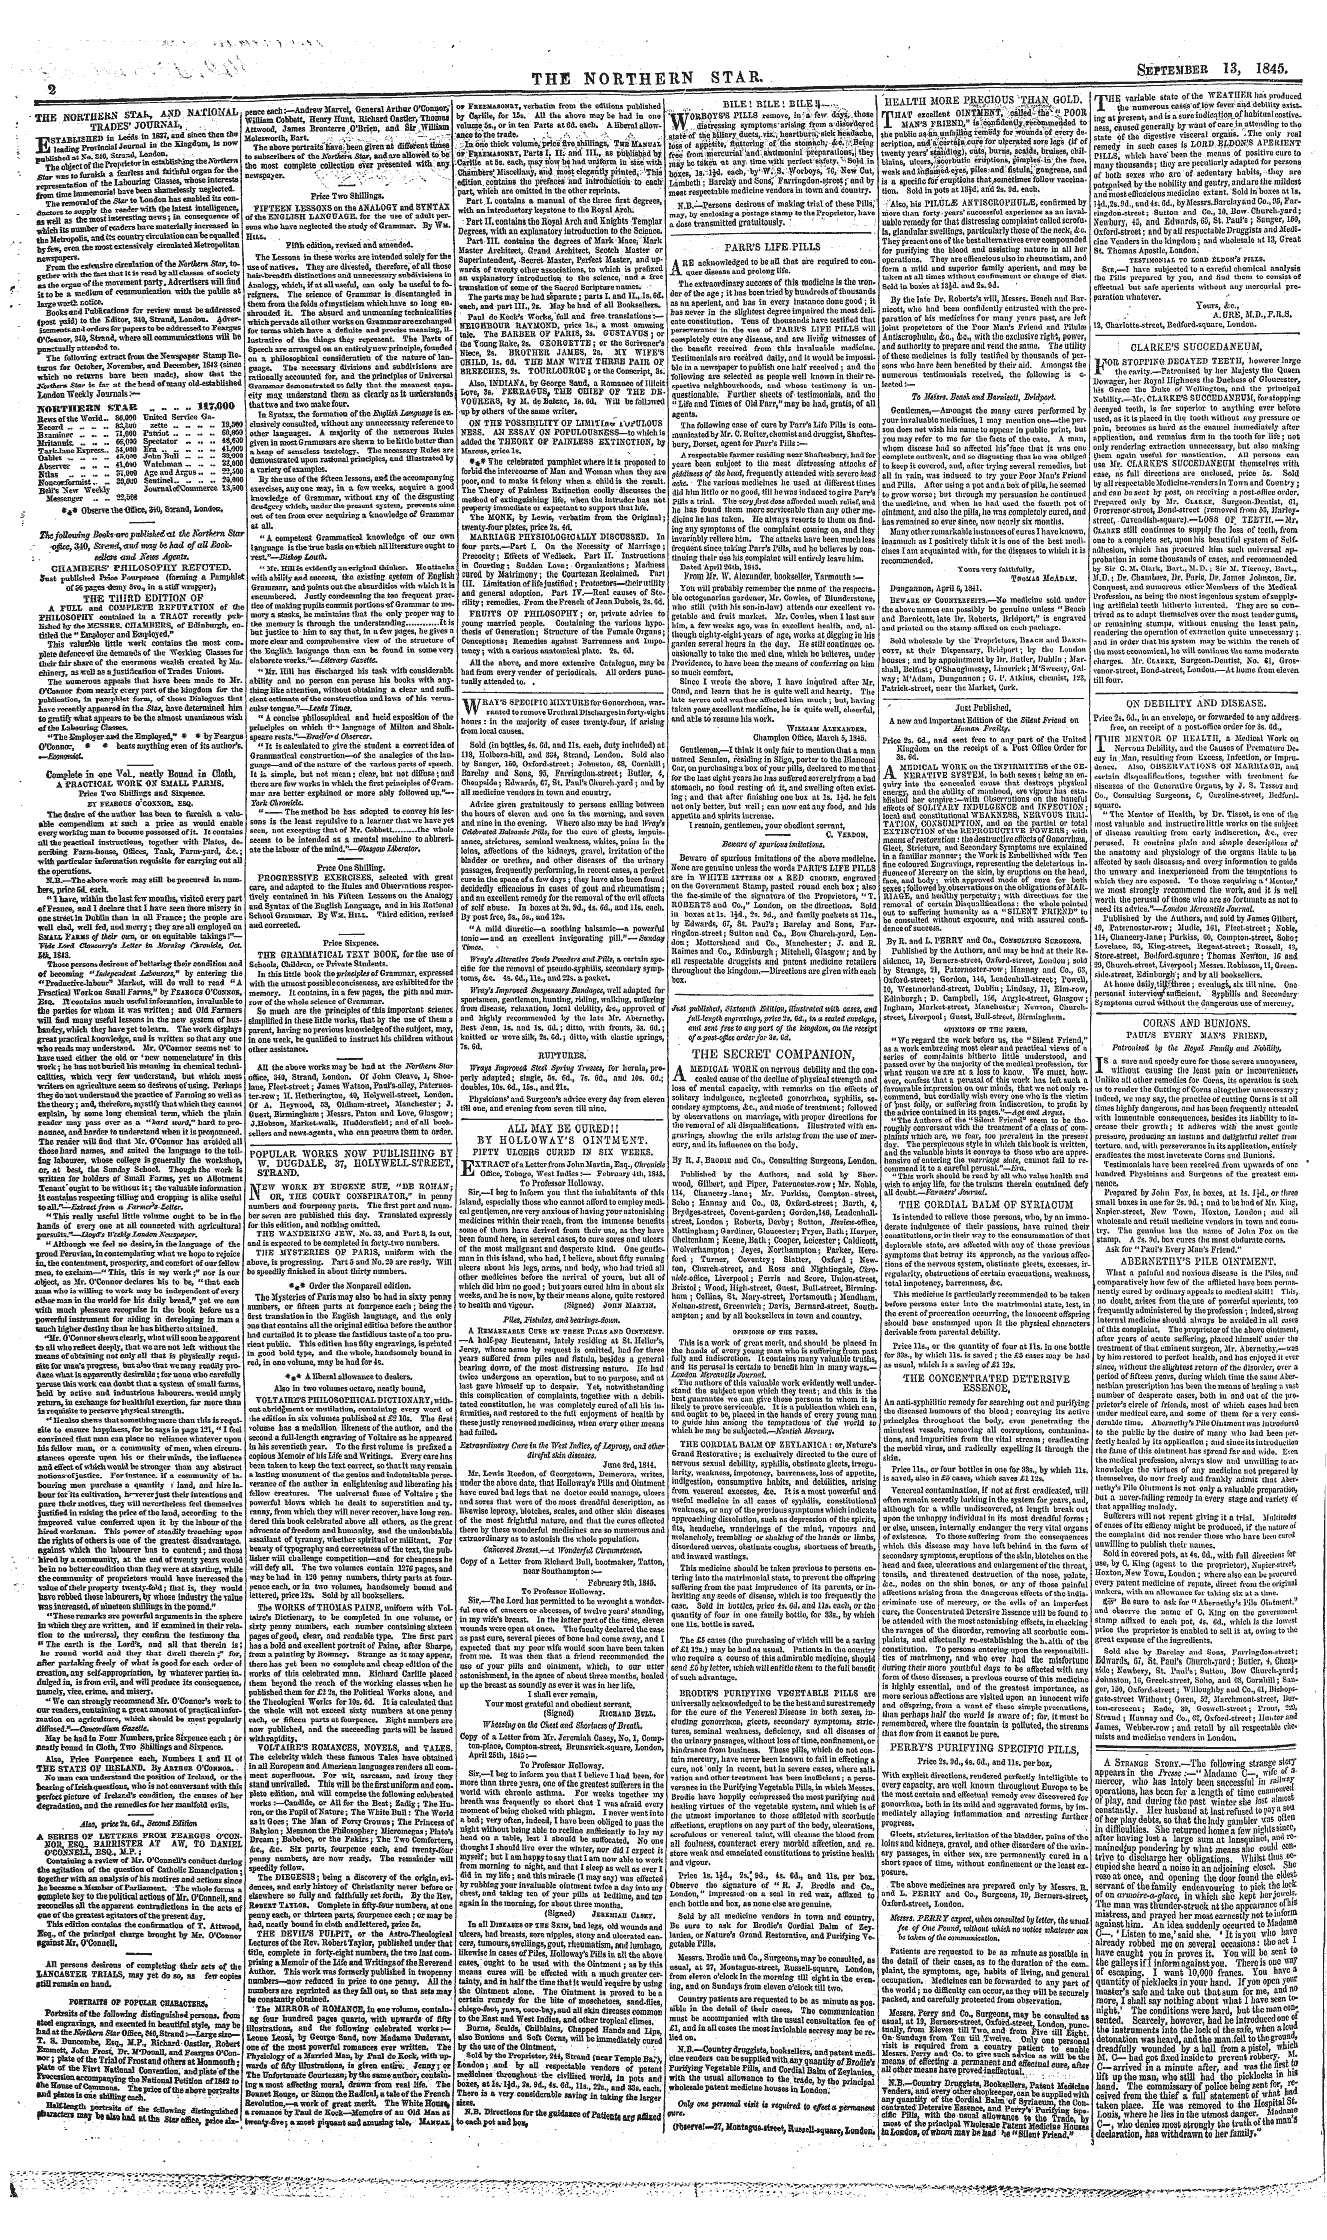 Northern Star (1837-1852): jS F Y, 4th edition - Ad00206